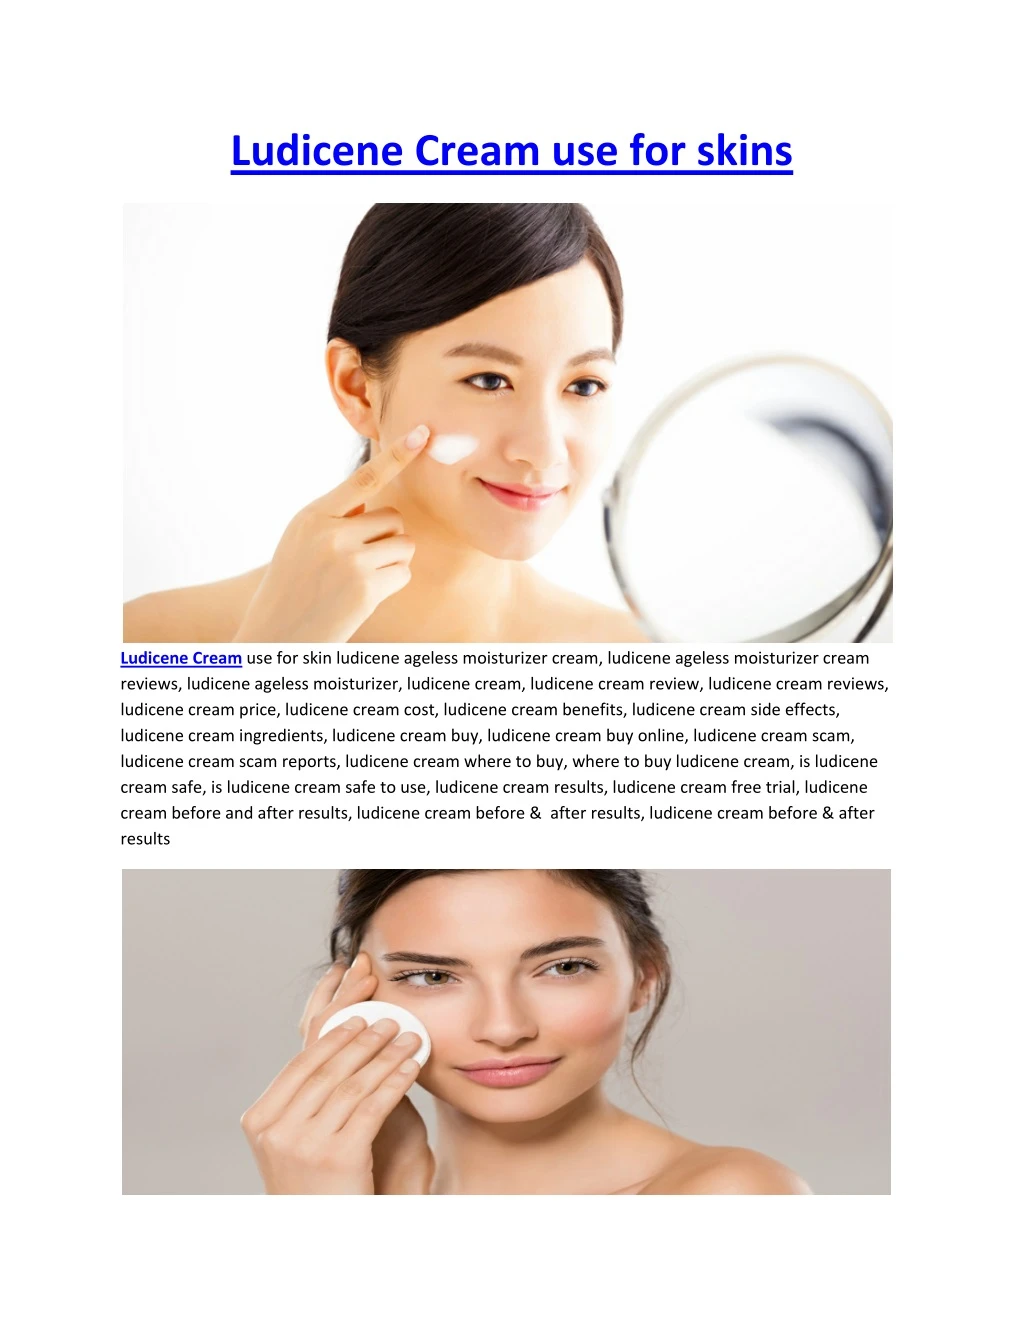 ludicene cream use for skins